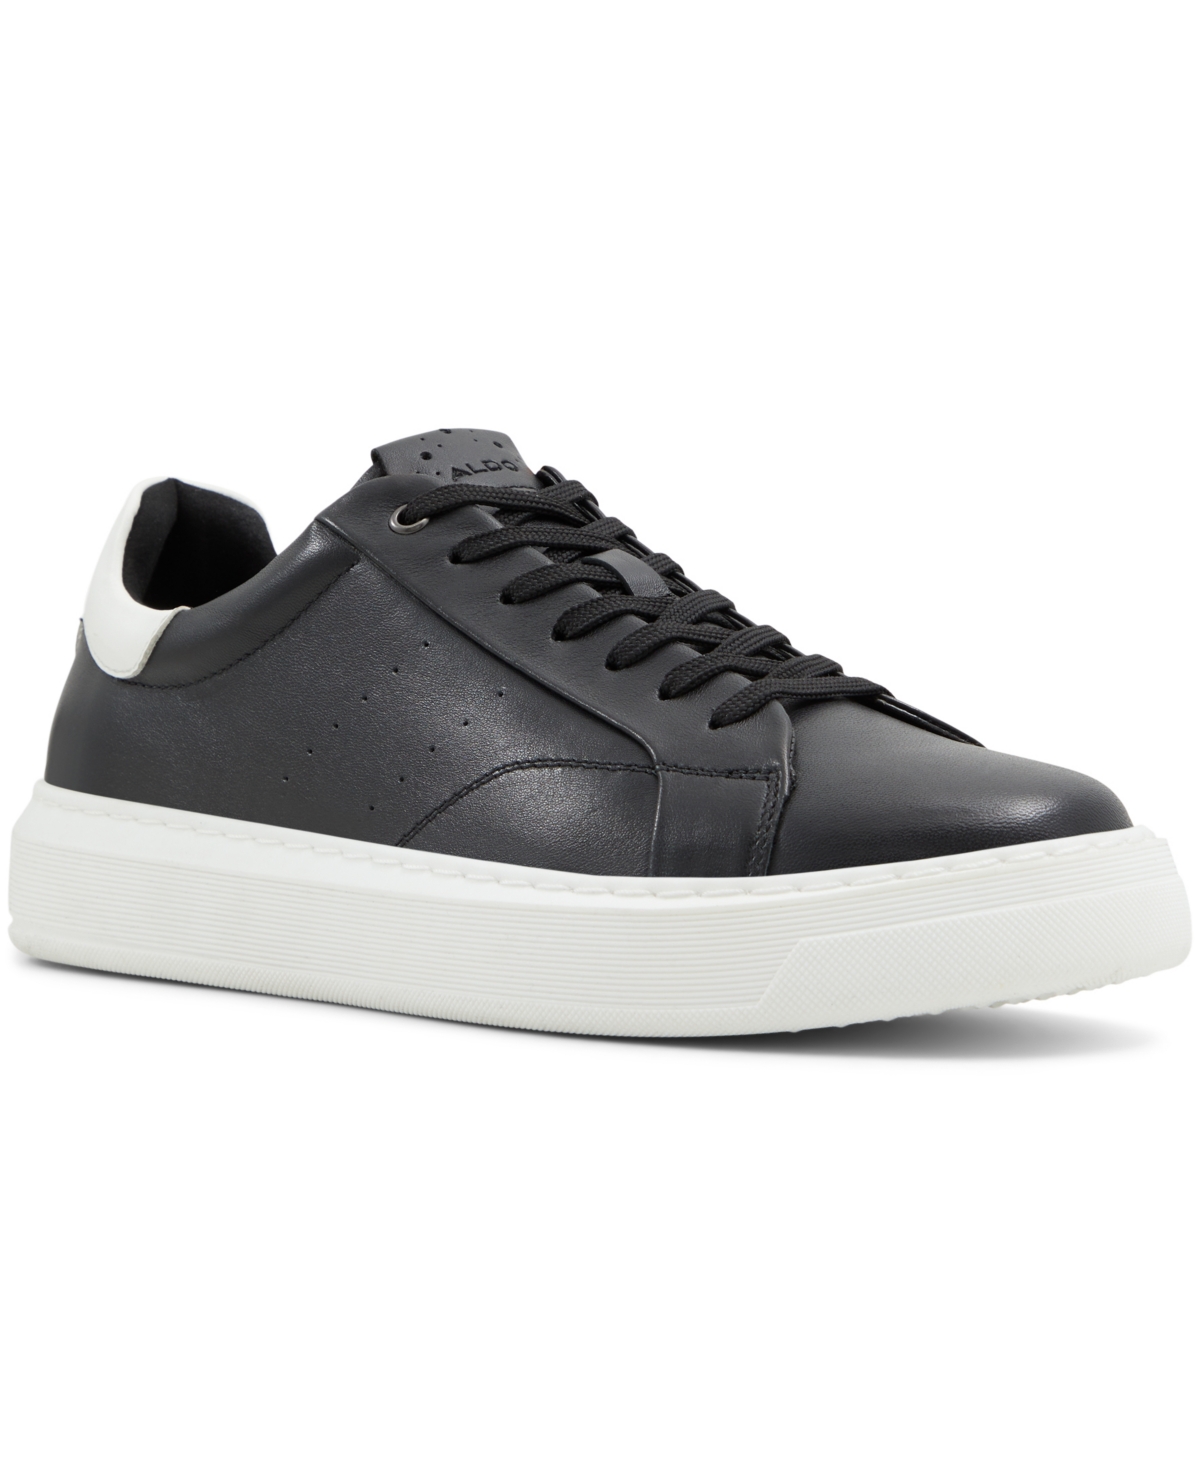 Men's Marconi Fashion Athletic Sneaker - Black